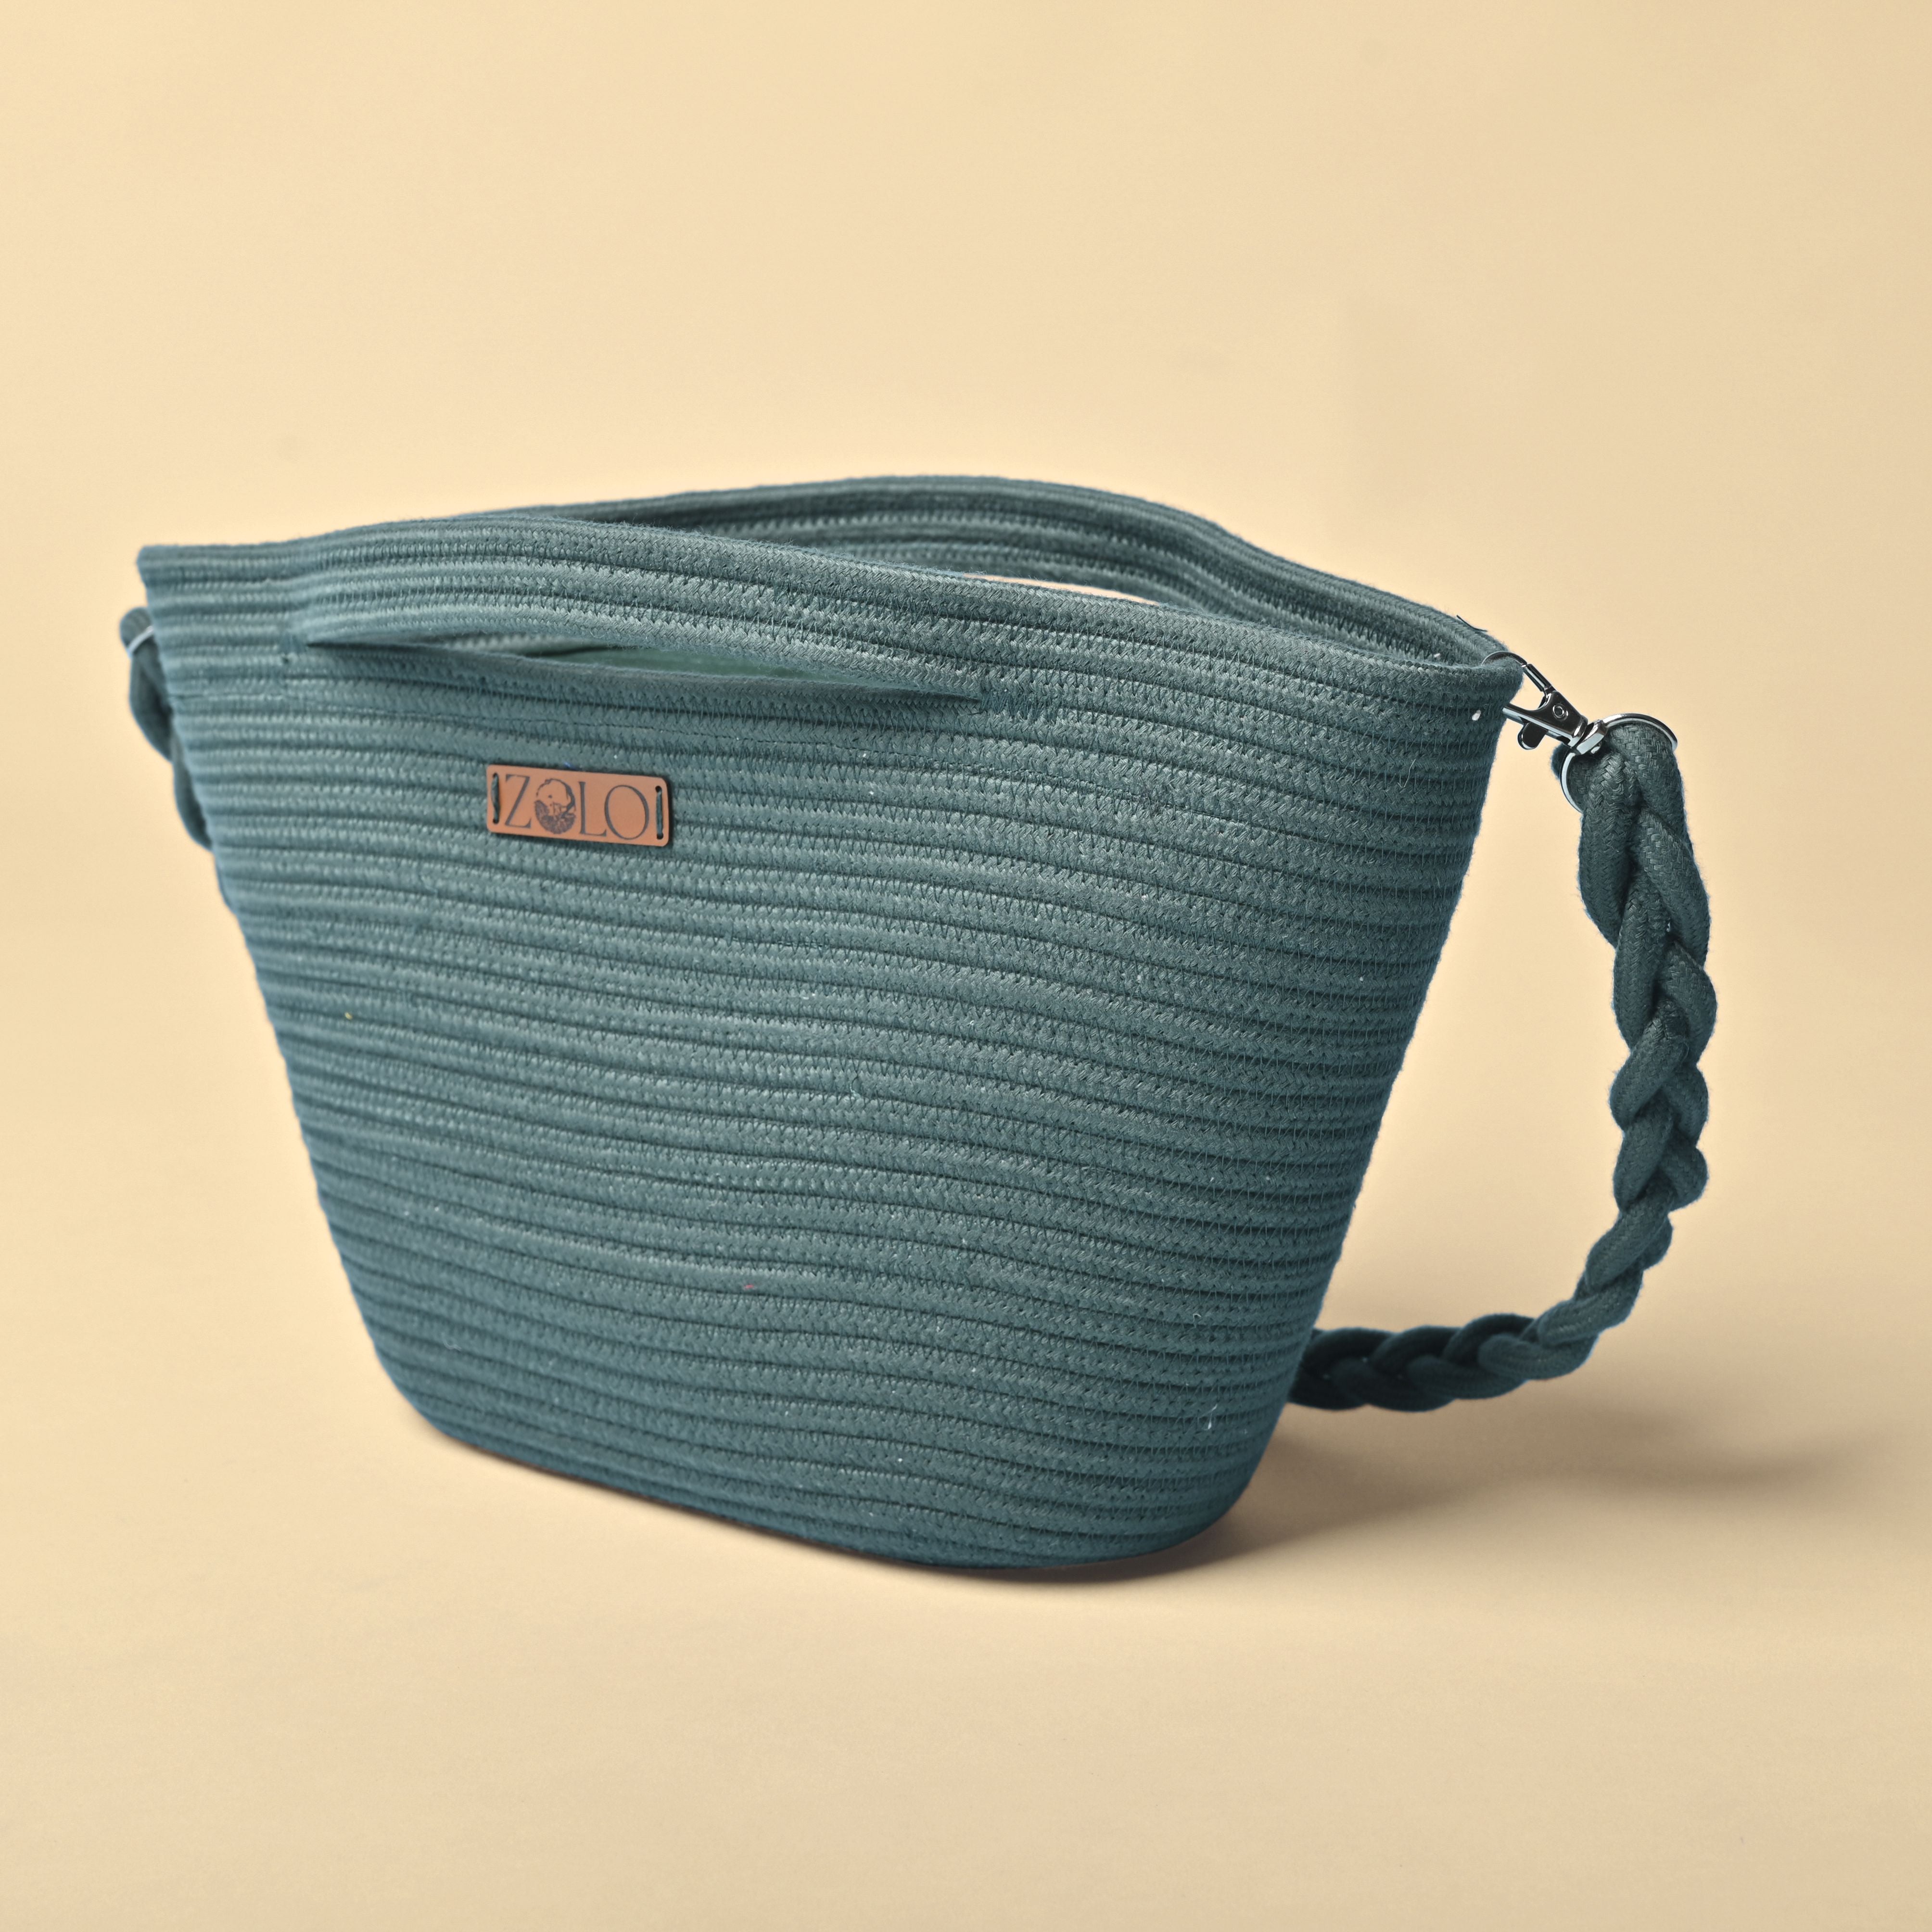 Cotton Basket Bag